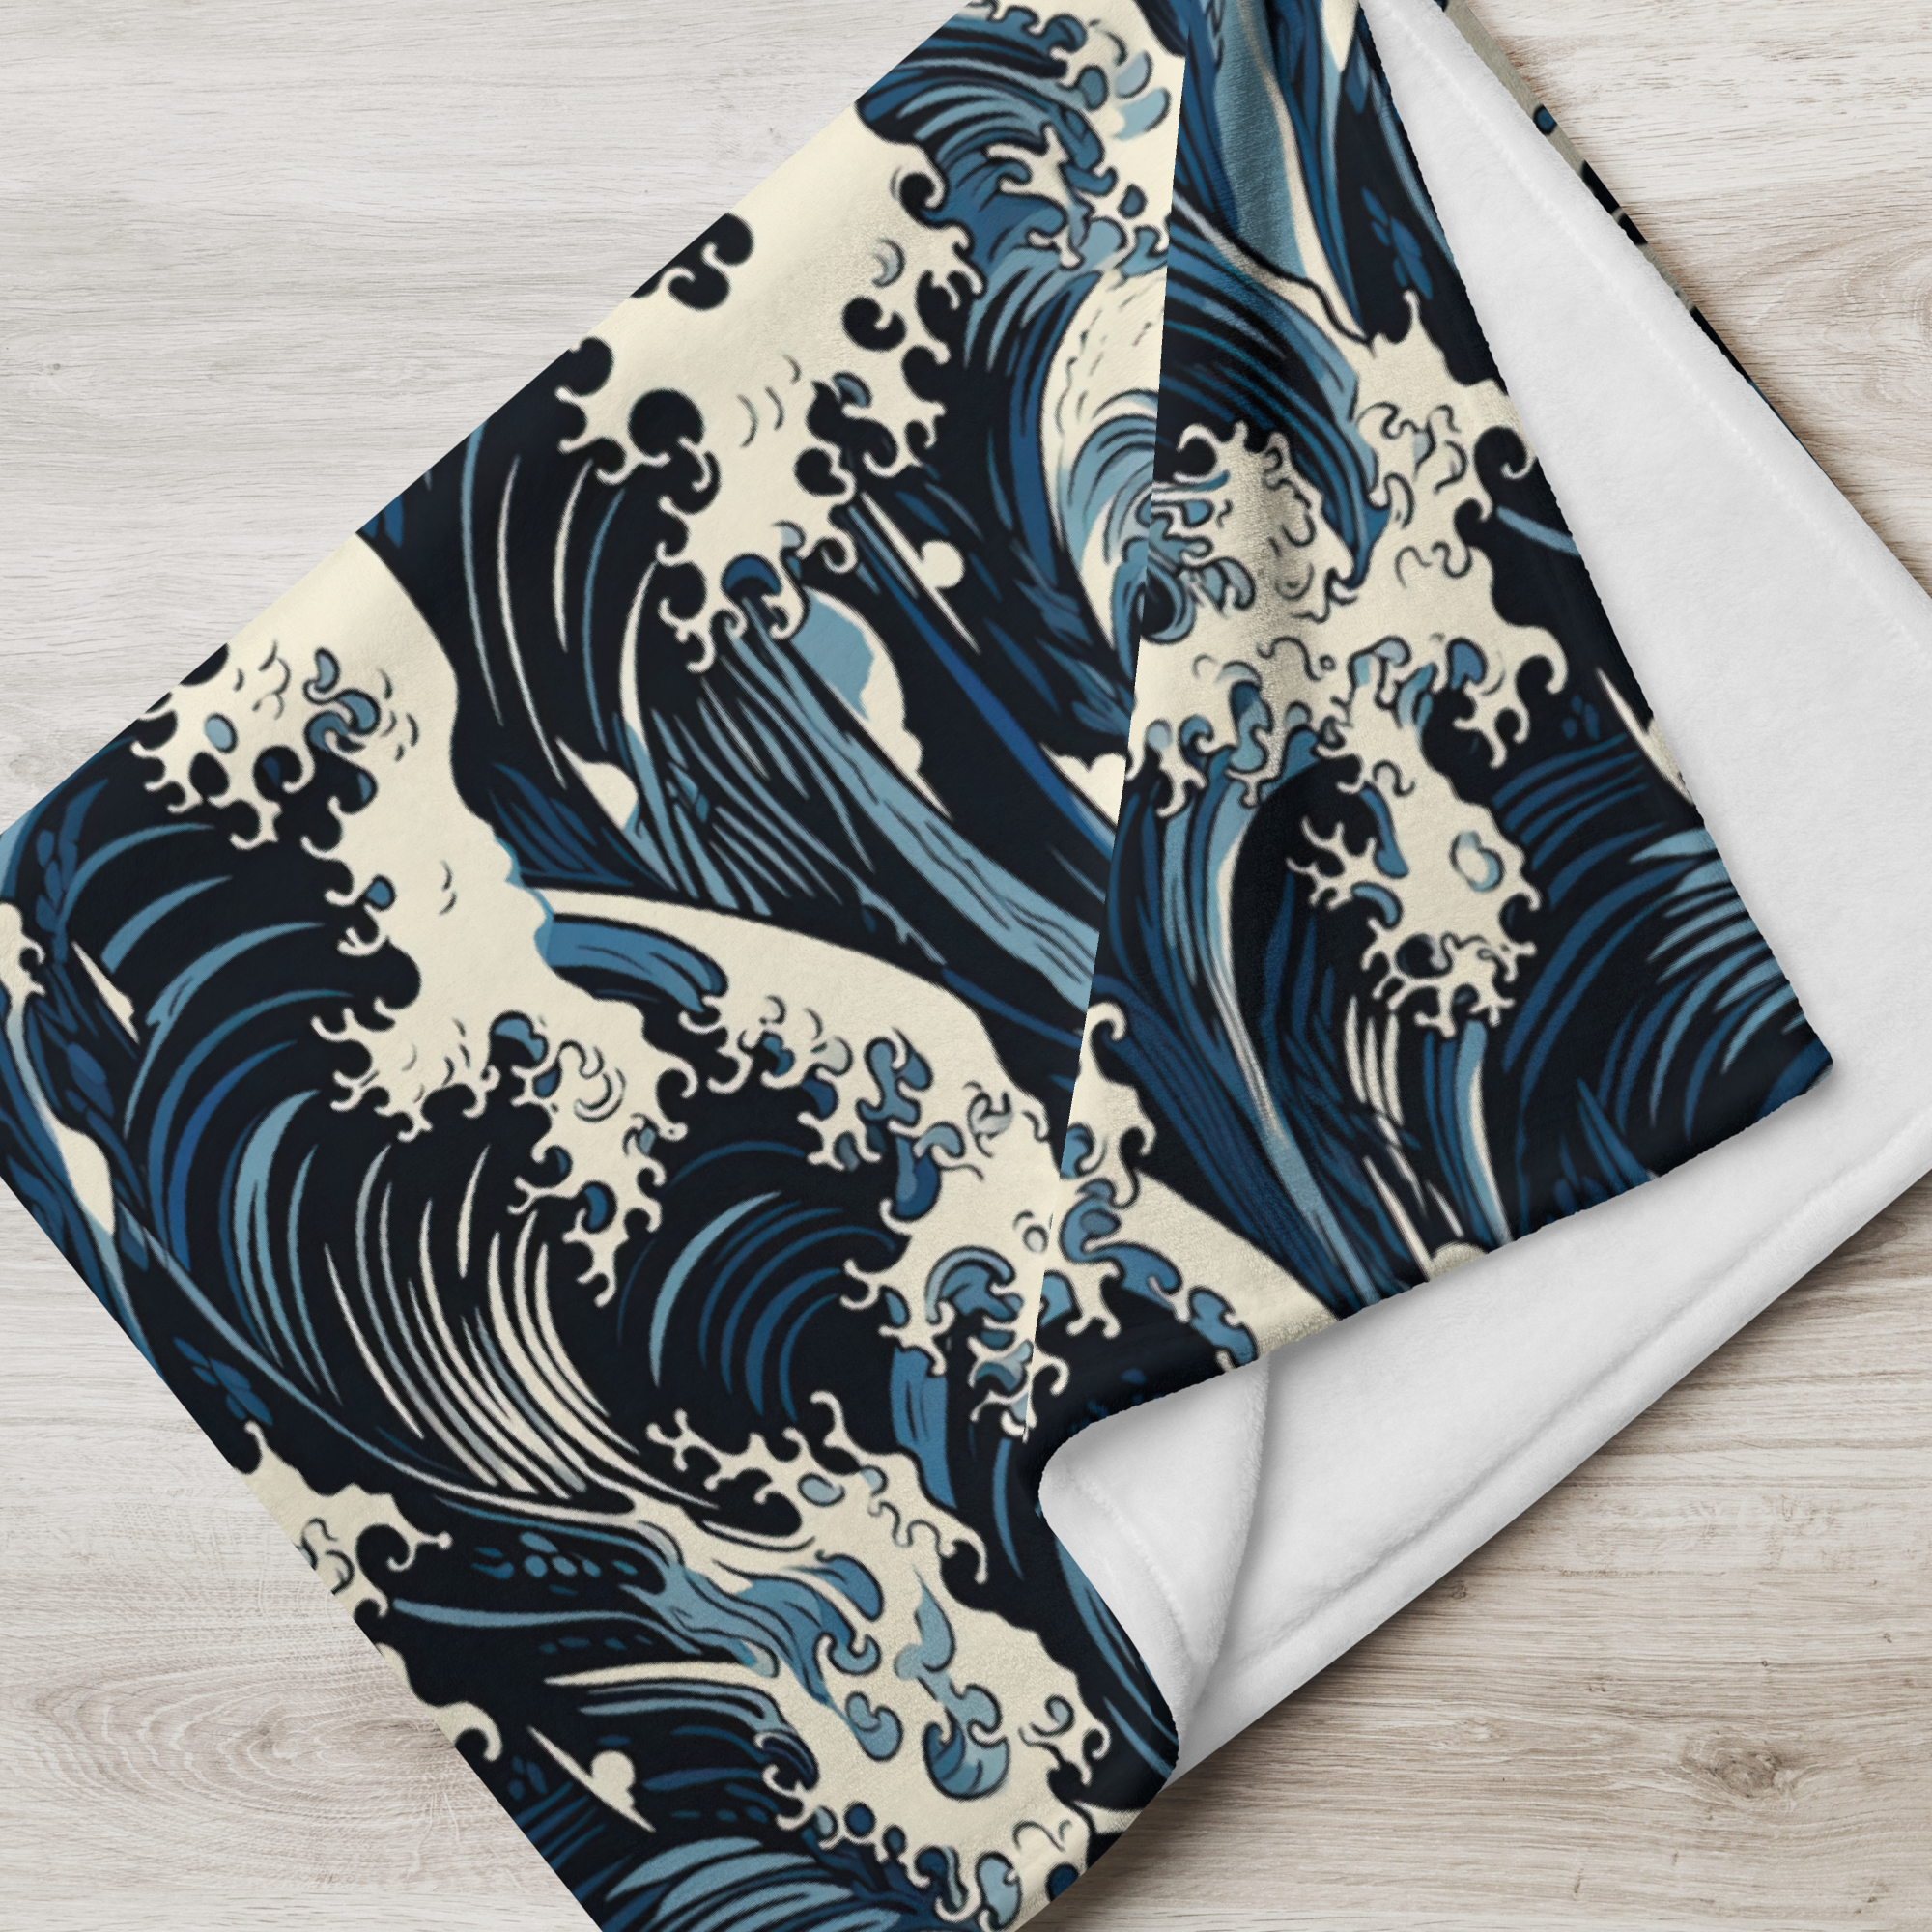 Great Waves Throw Blanket